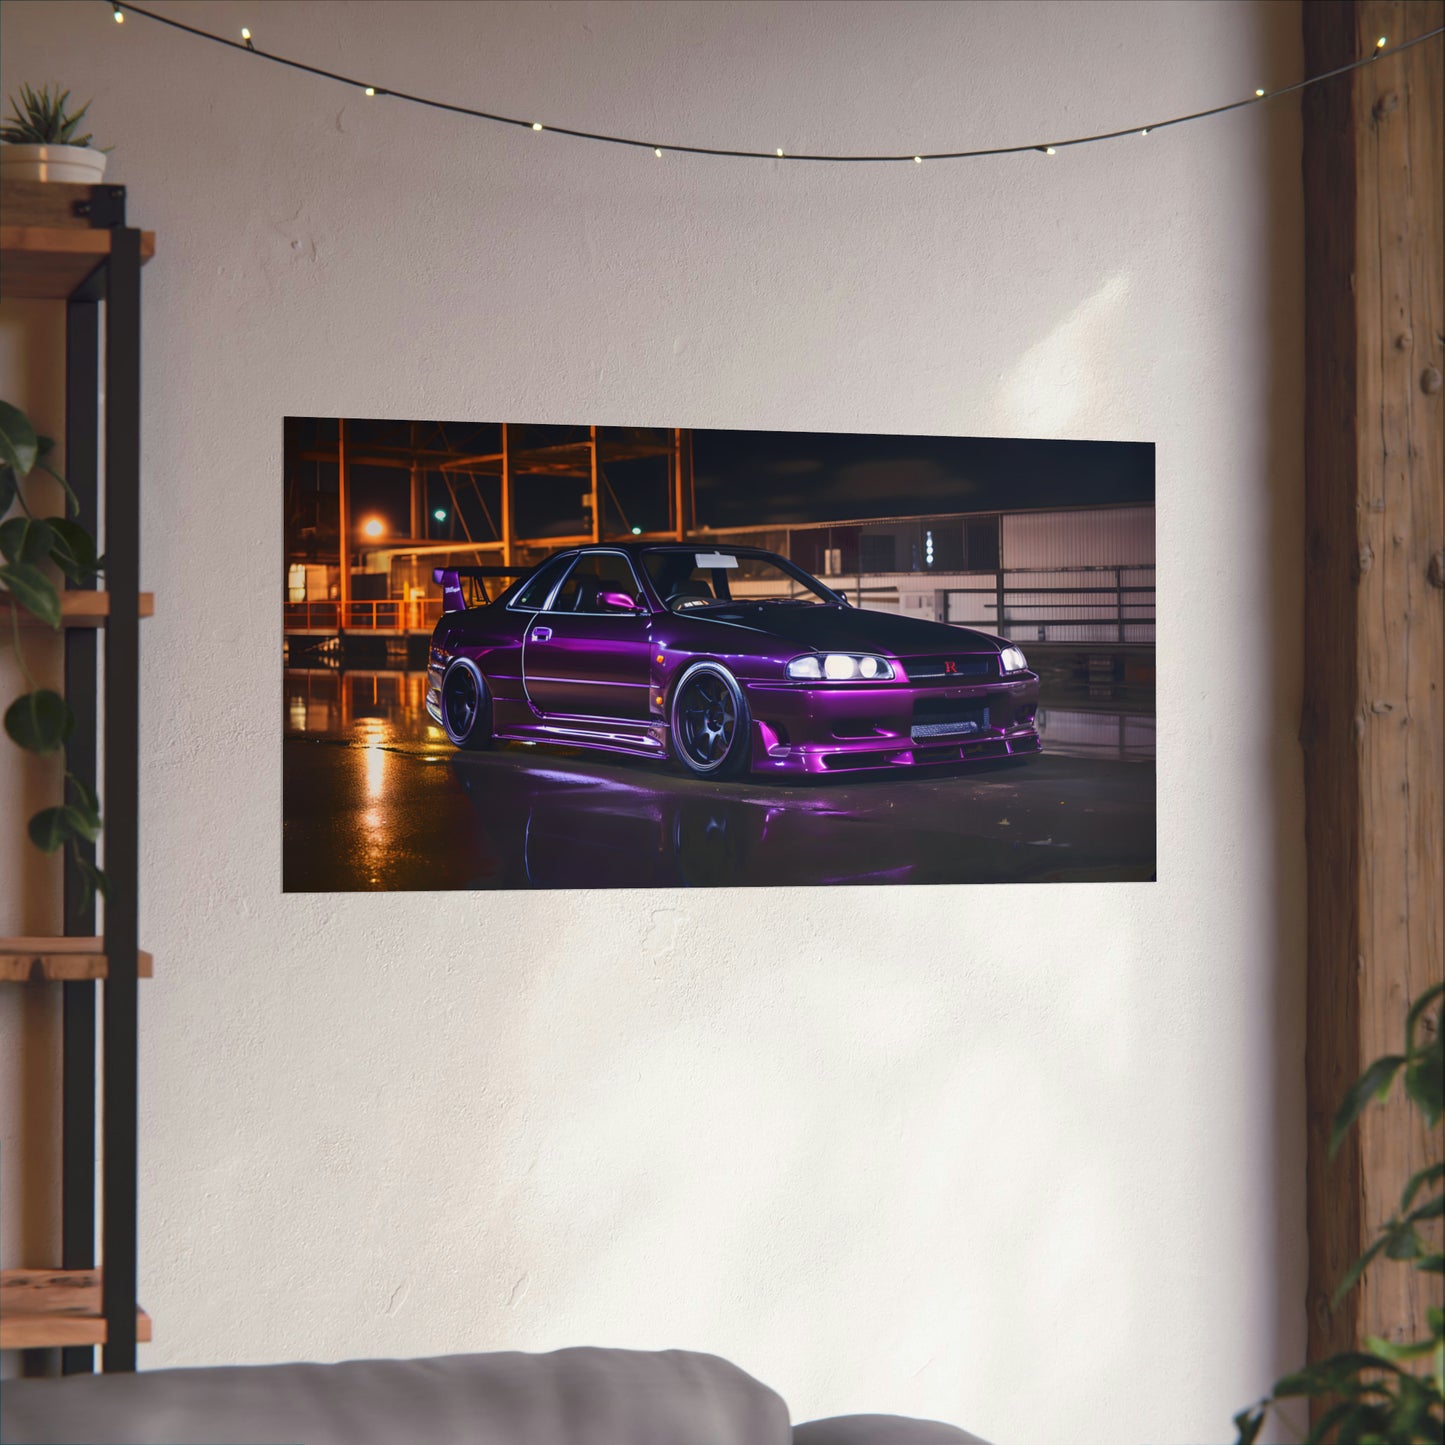 Purple Nissan Skyline Luxury Dream Car Wall Art  Poster Print